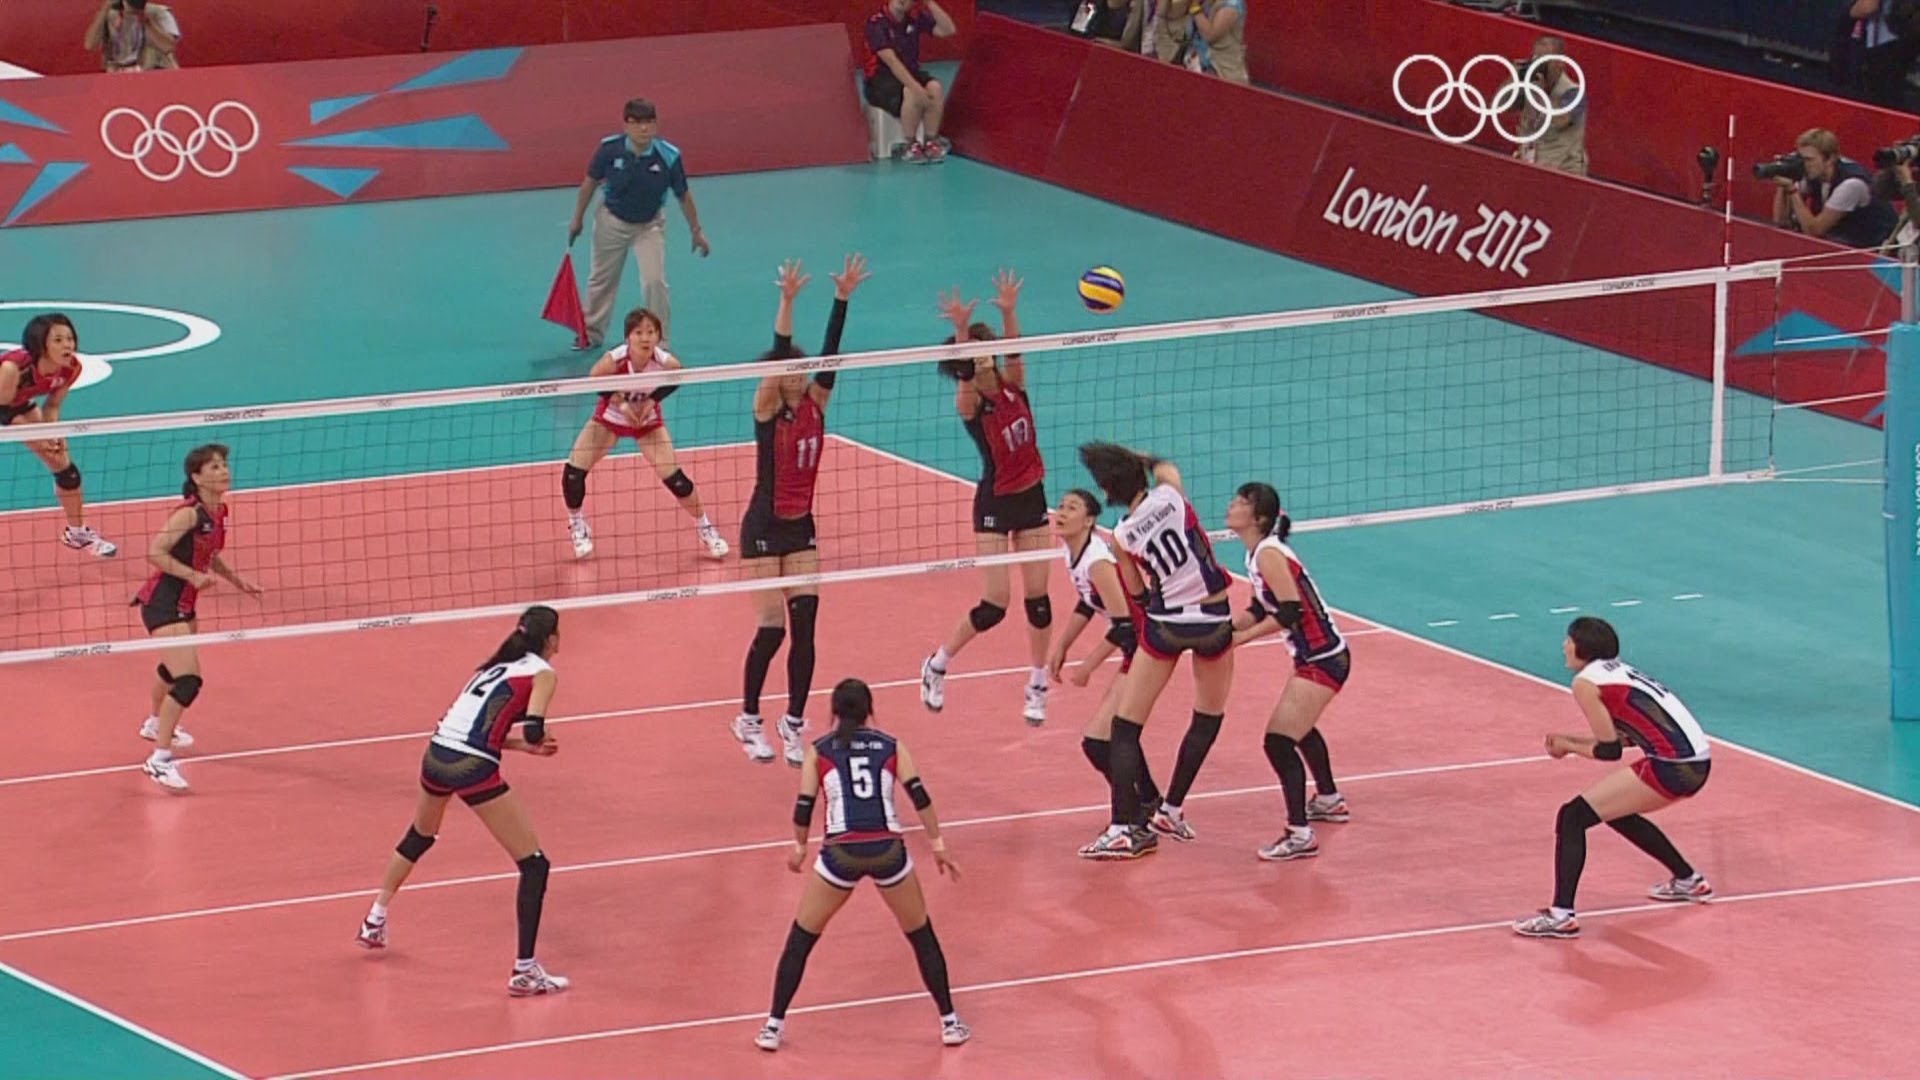 Women's Volleyball - Japan v Korea - Bronze Medal Match | London ...